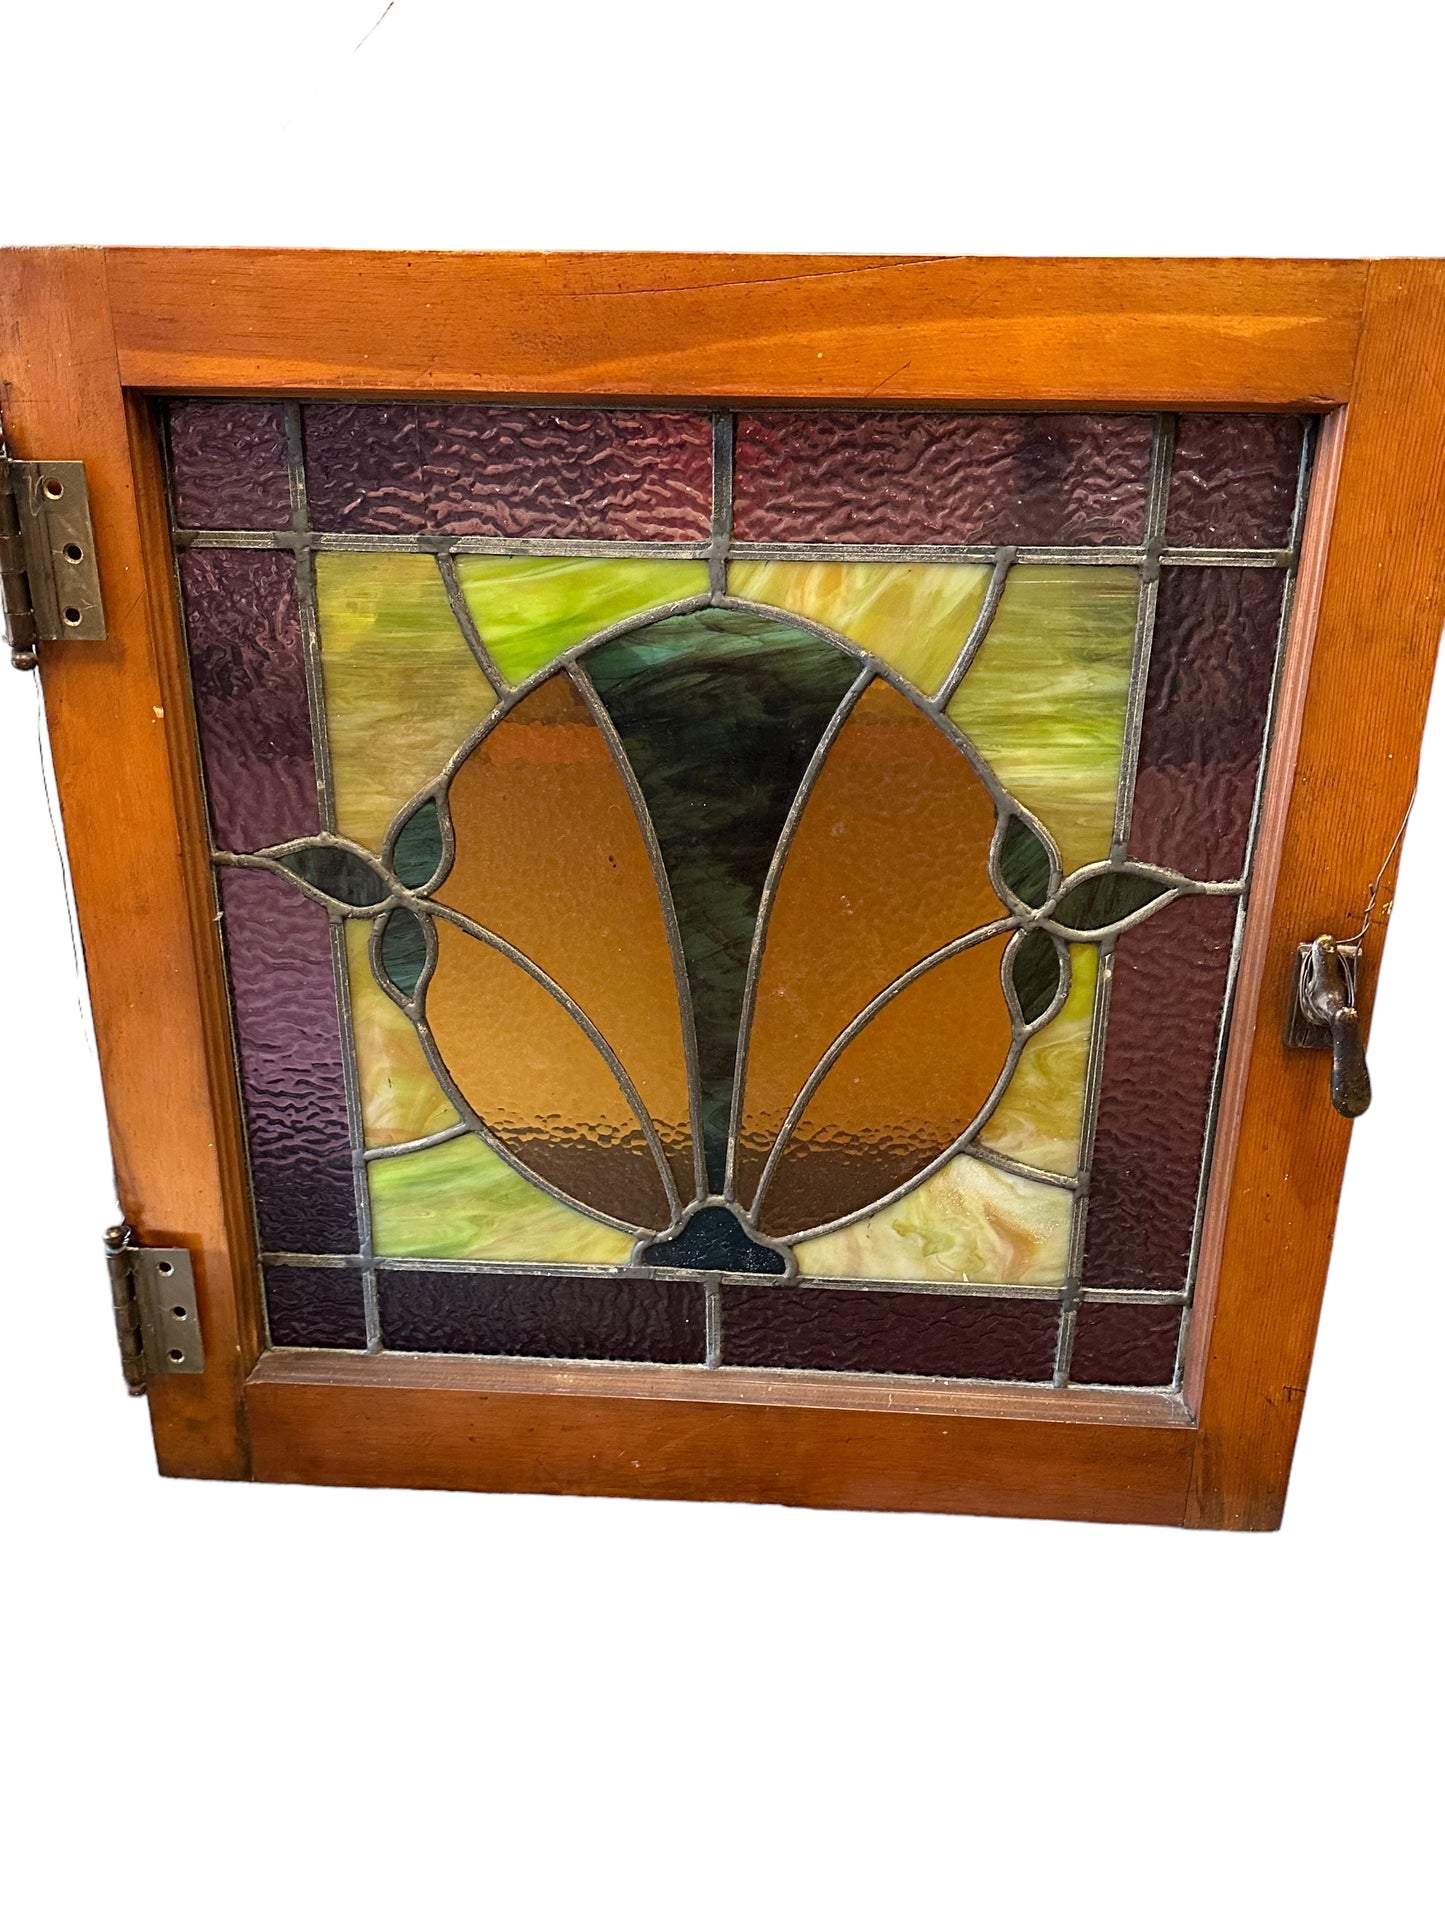 Antique Framed Art Nouveau Stained Glass Suncatcher Window w/ Original Hardware & Lock